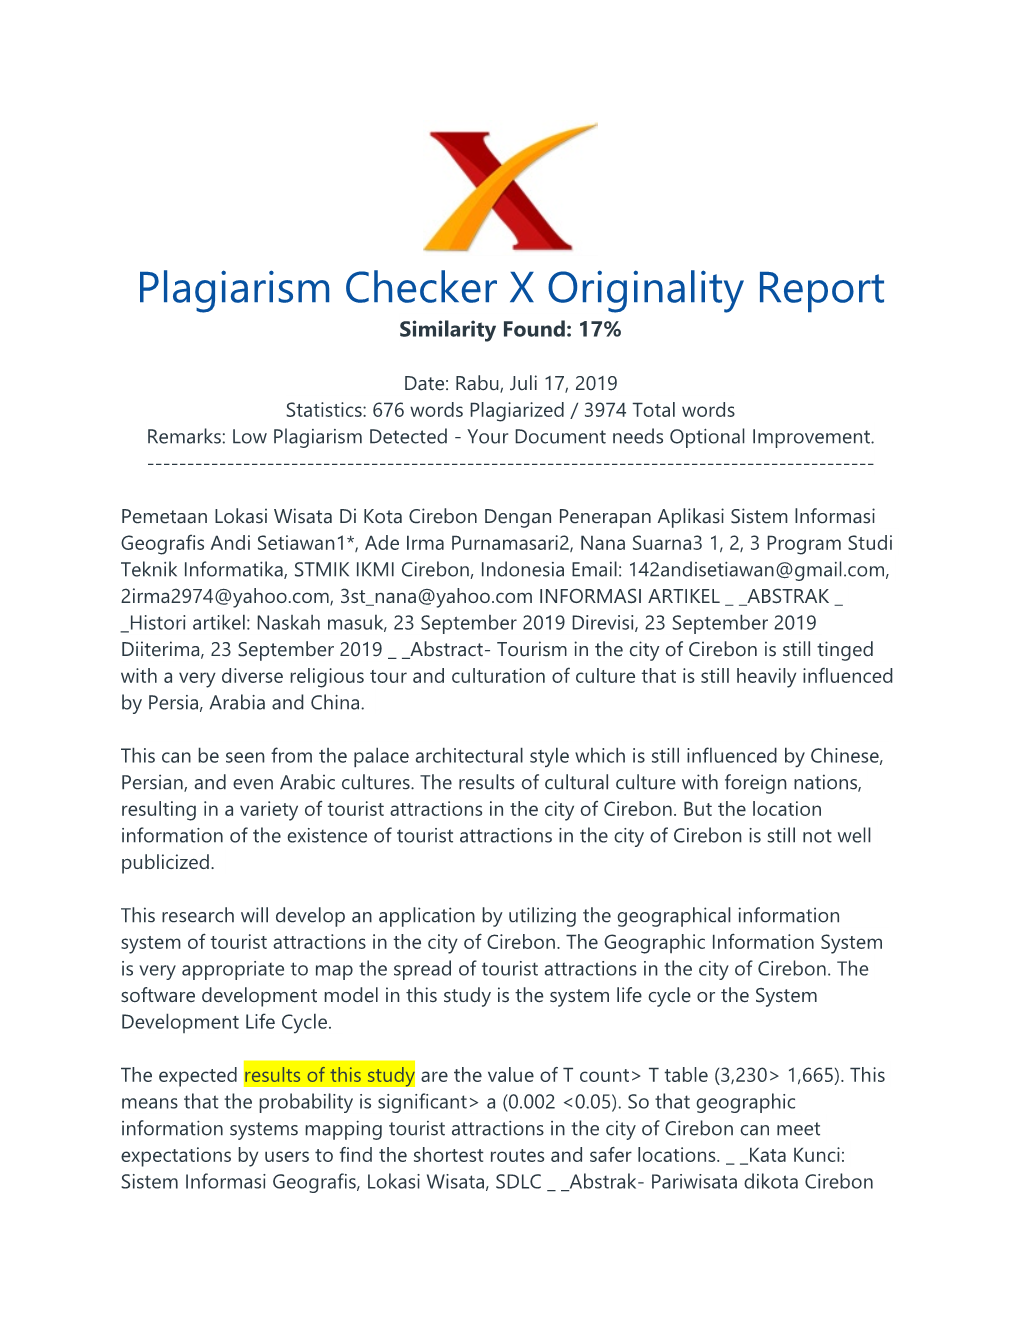 Plagiarism Checker X Originality Report Similarity Found: 17%